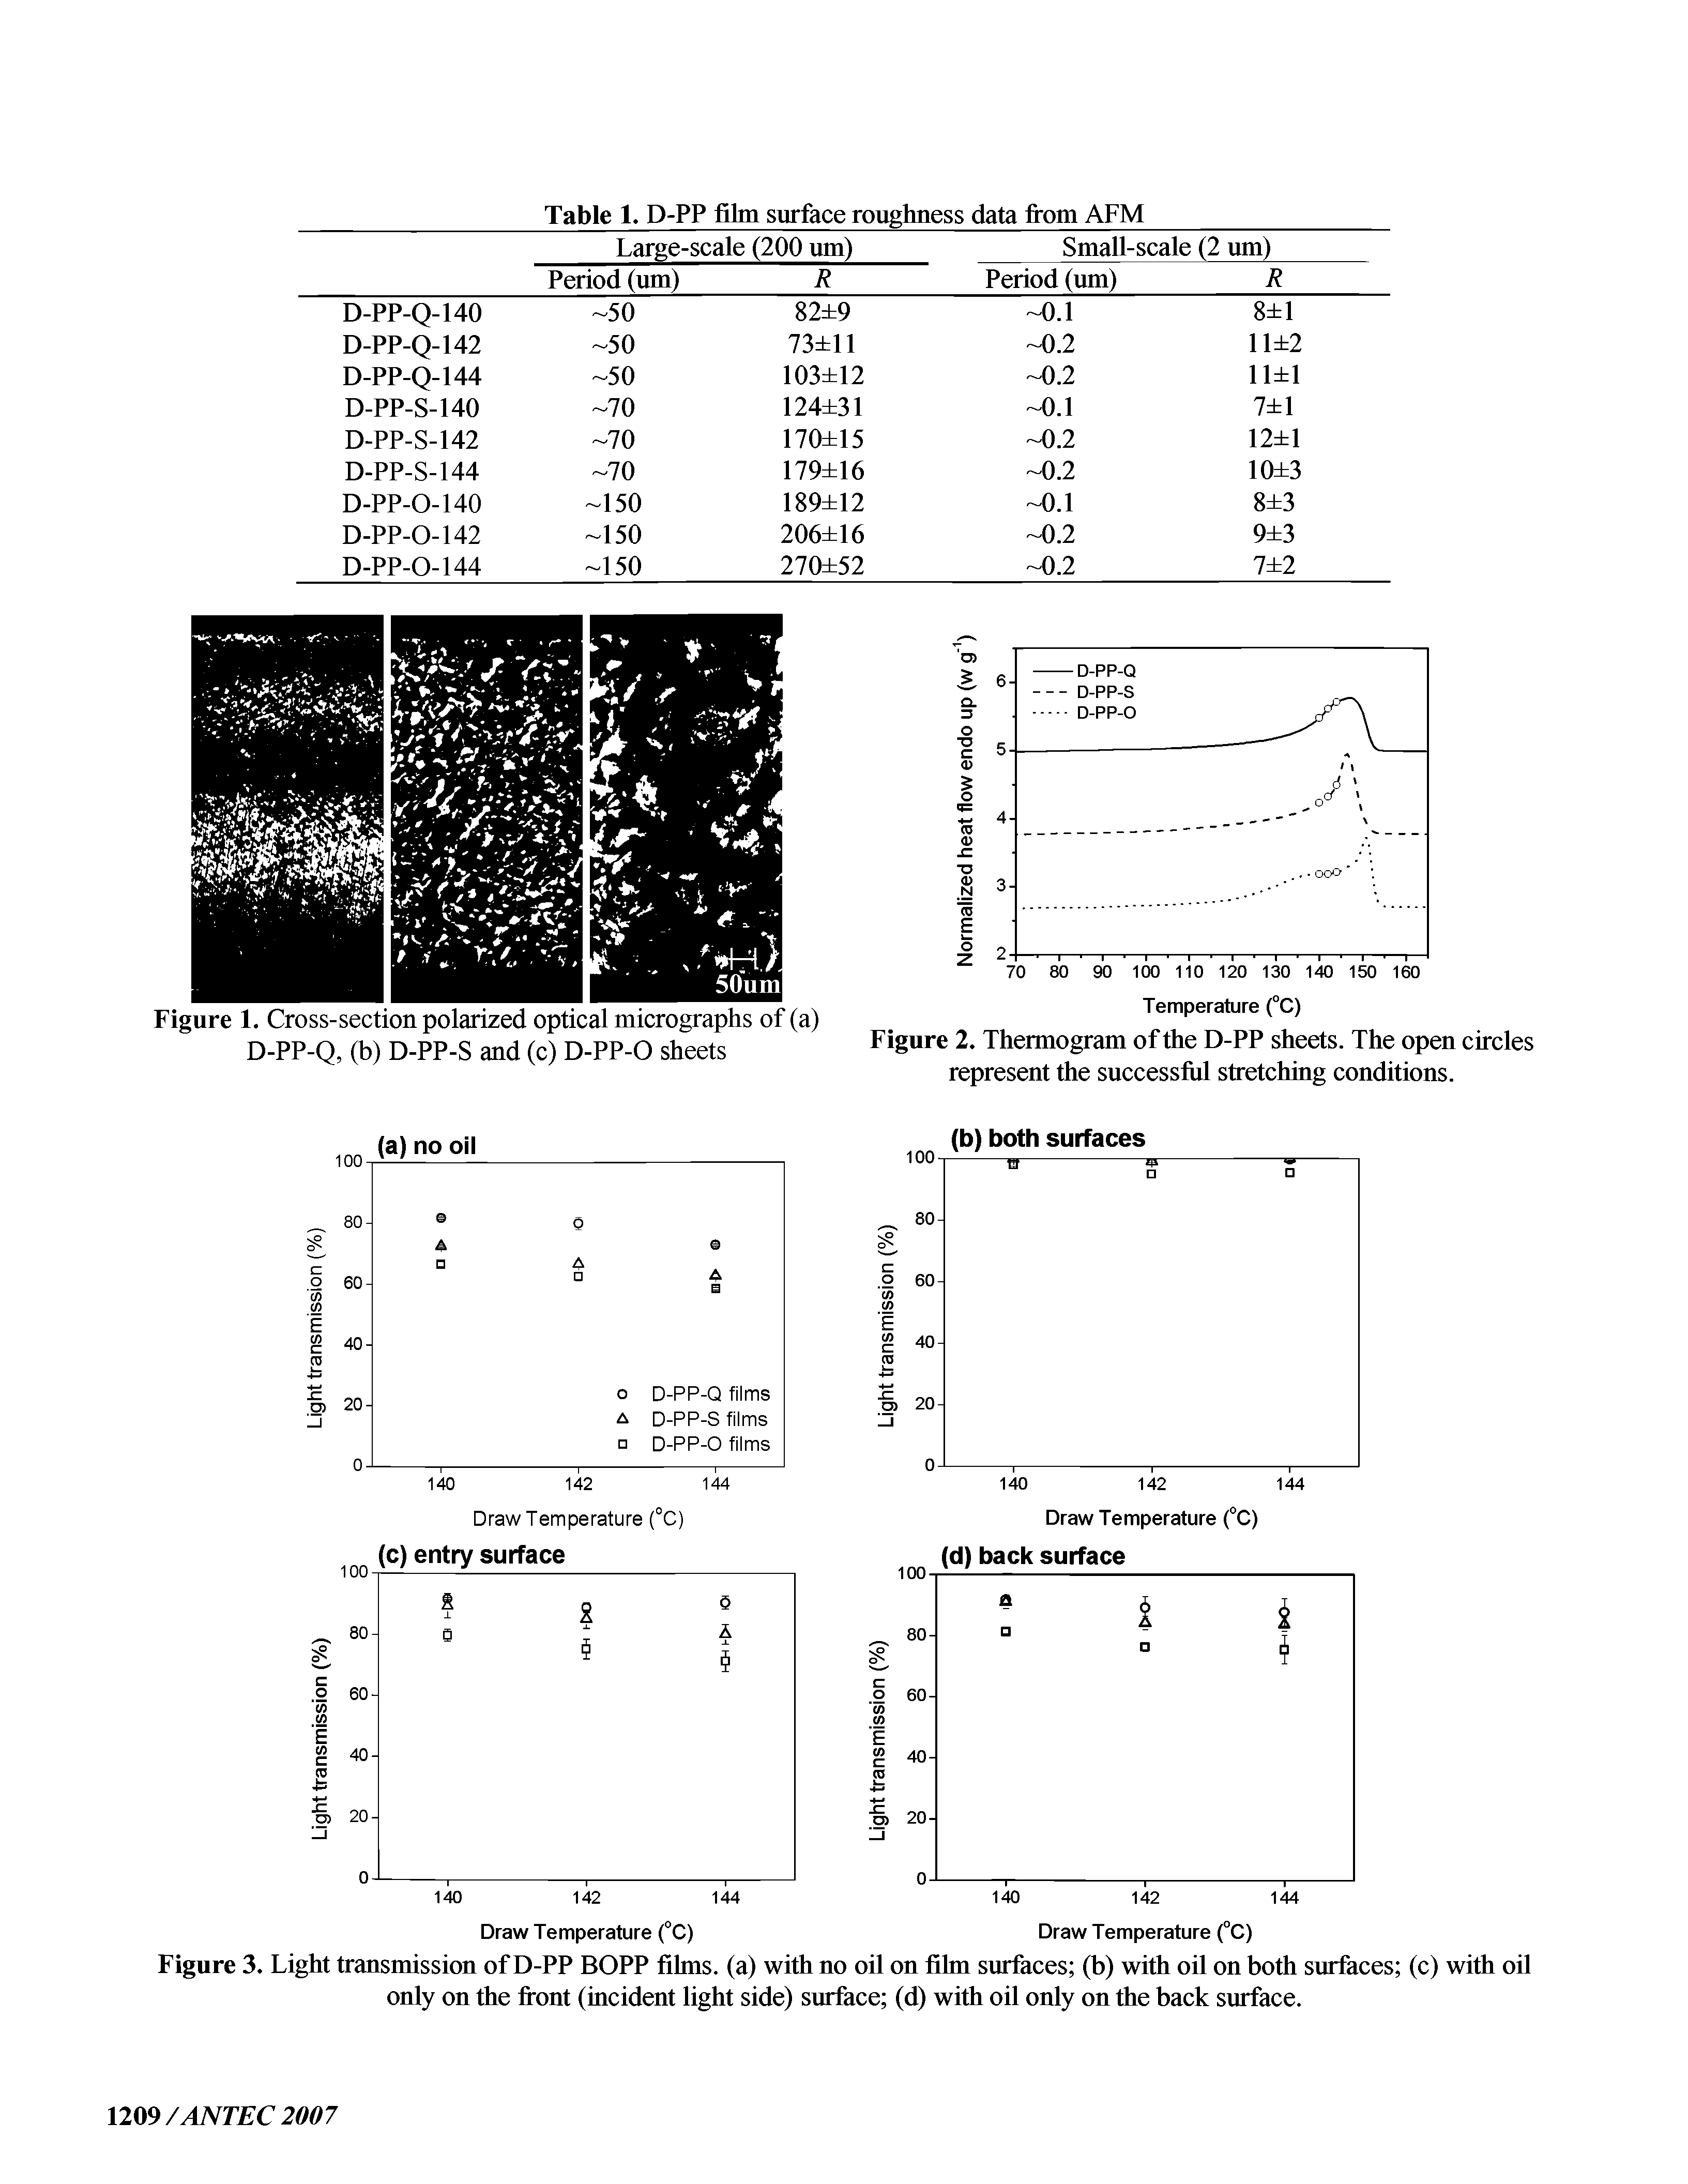 Figure 1. Cross-section polarized optical micrographs of (a) D-PP-Q, (b) D-PP-S and (c) D-PP-0 sheets...